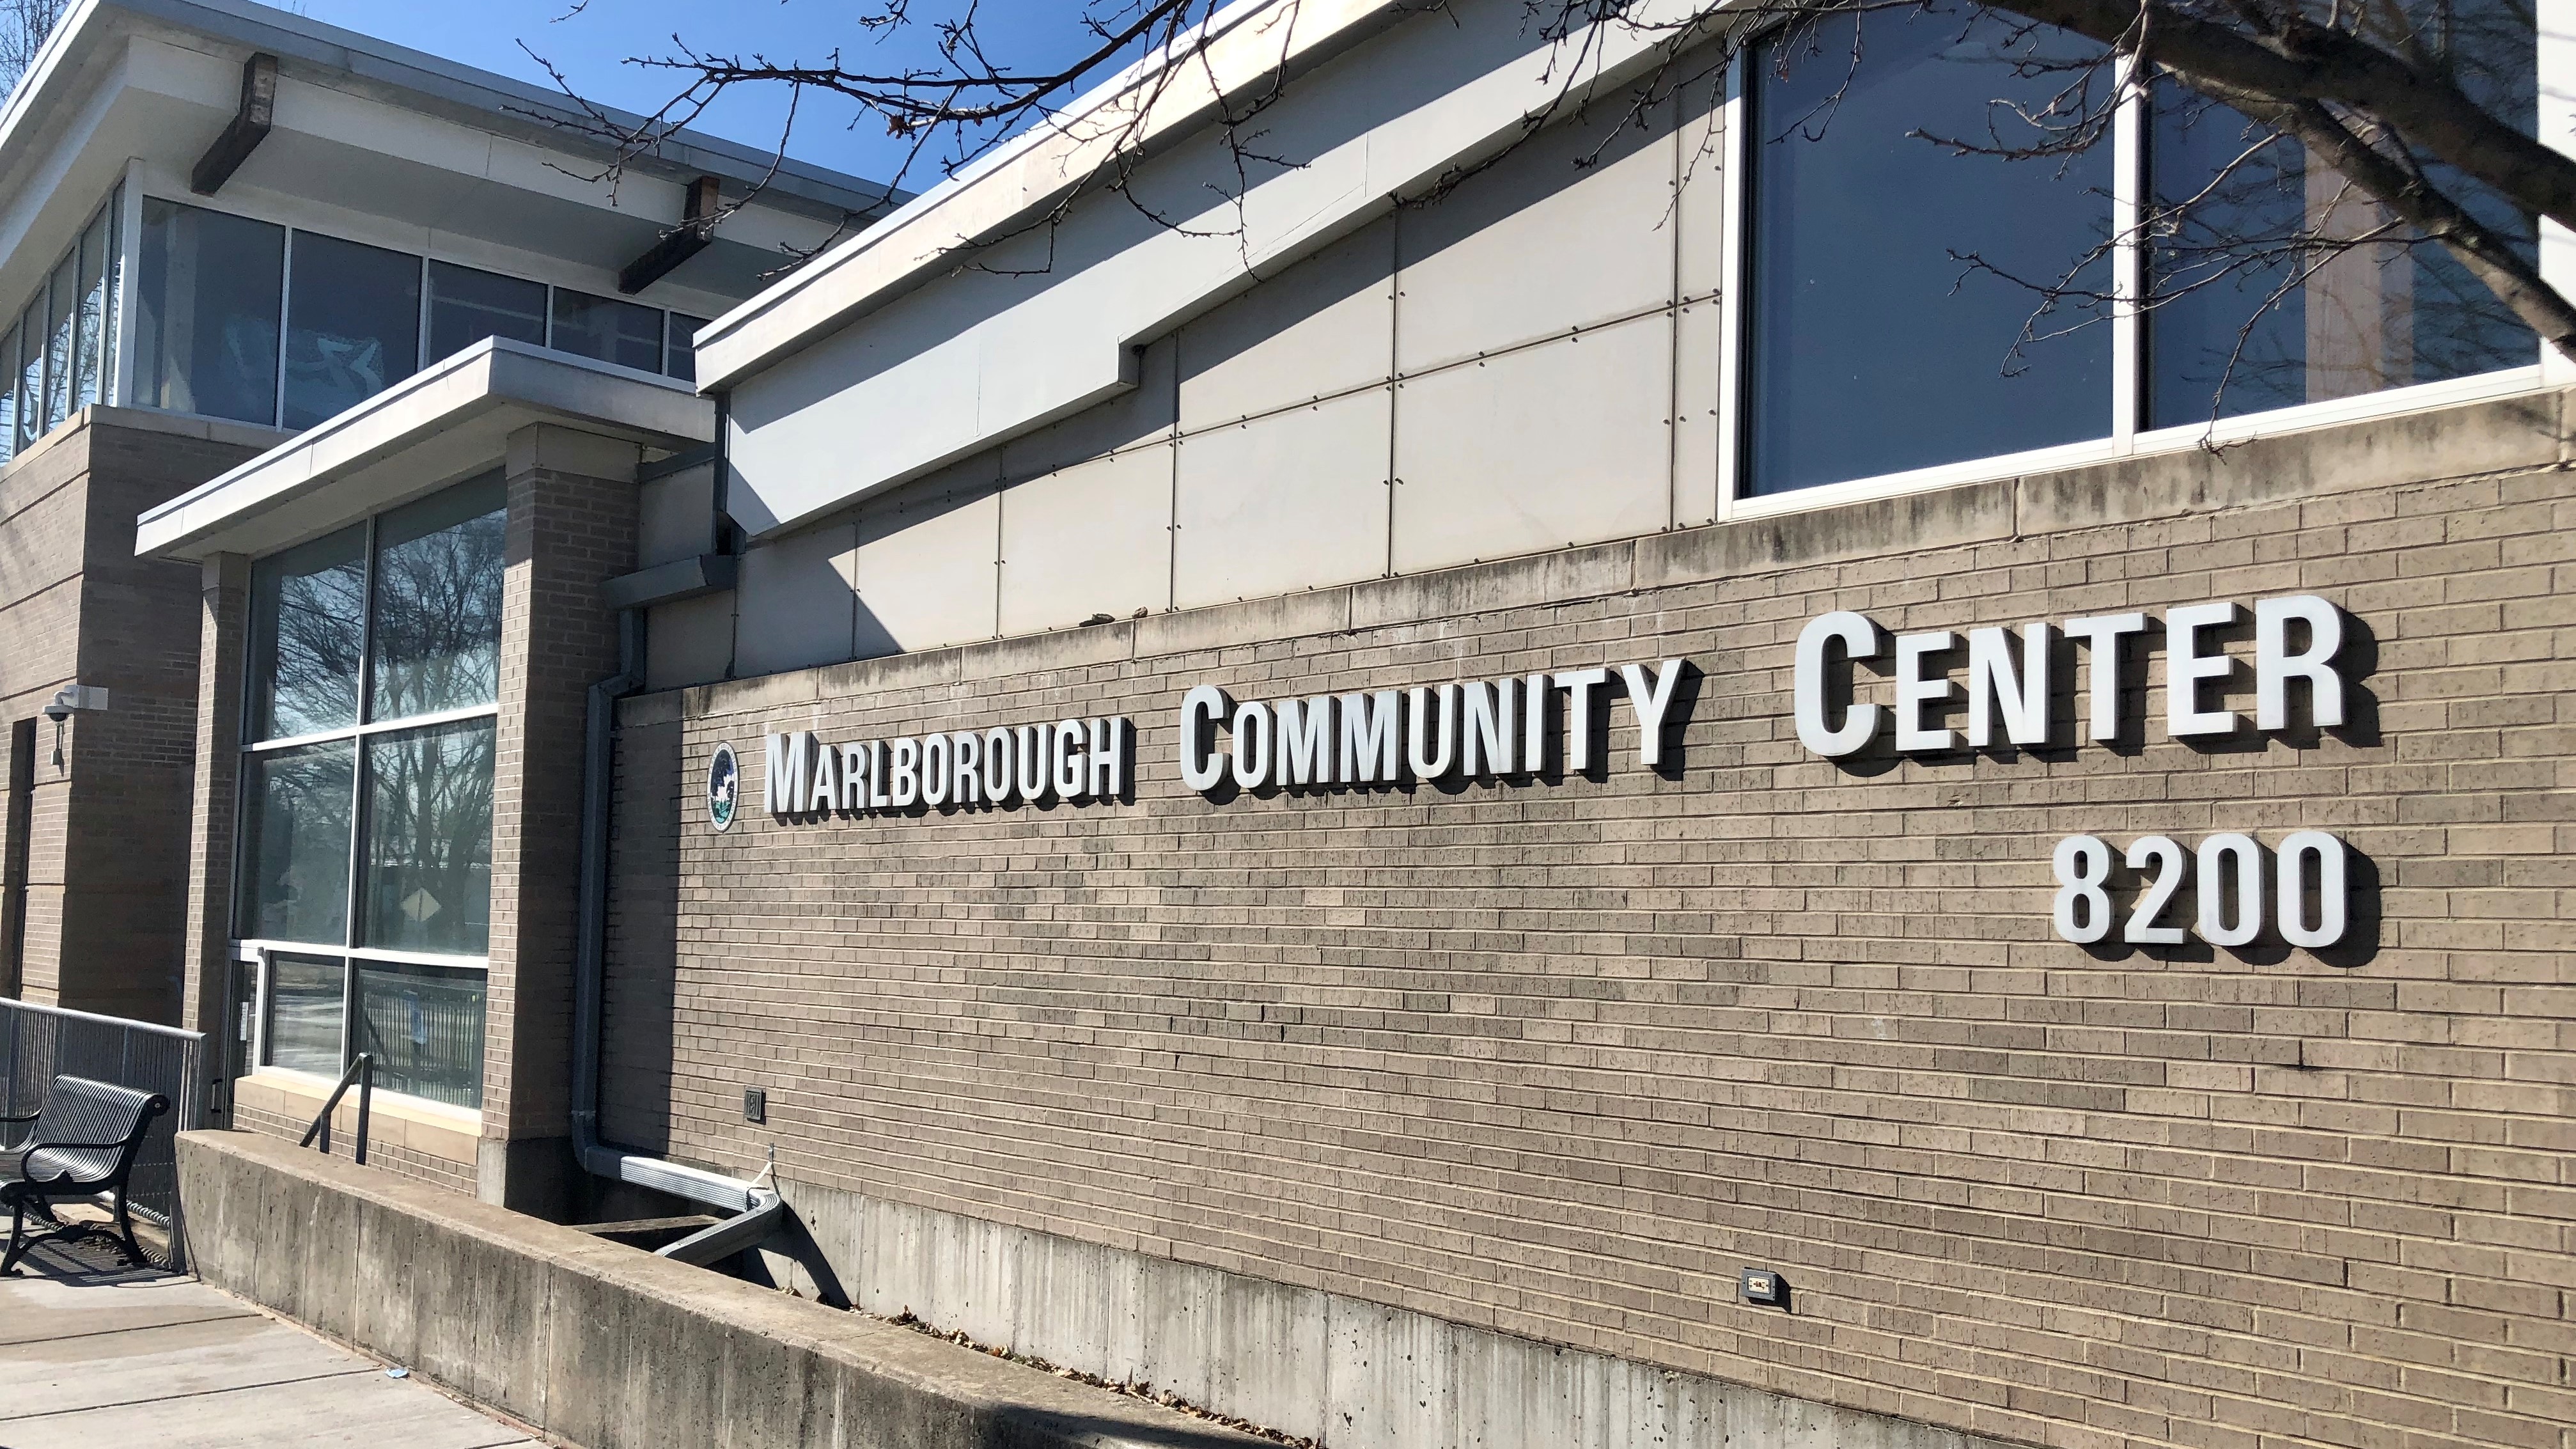 Marlborough Community Center 8200